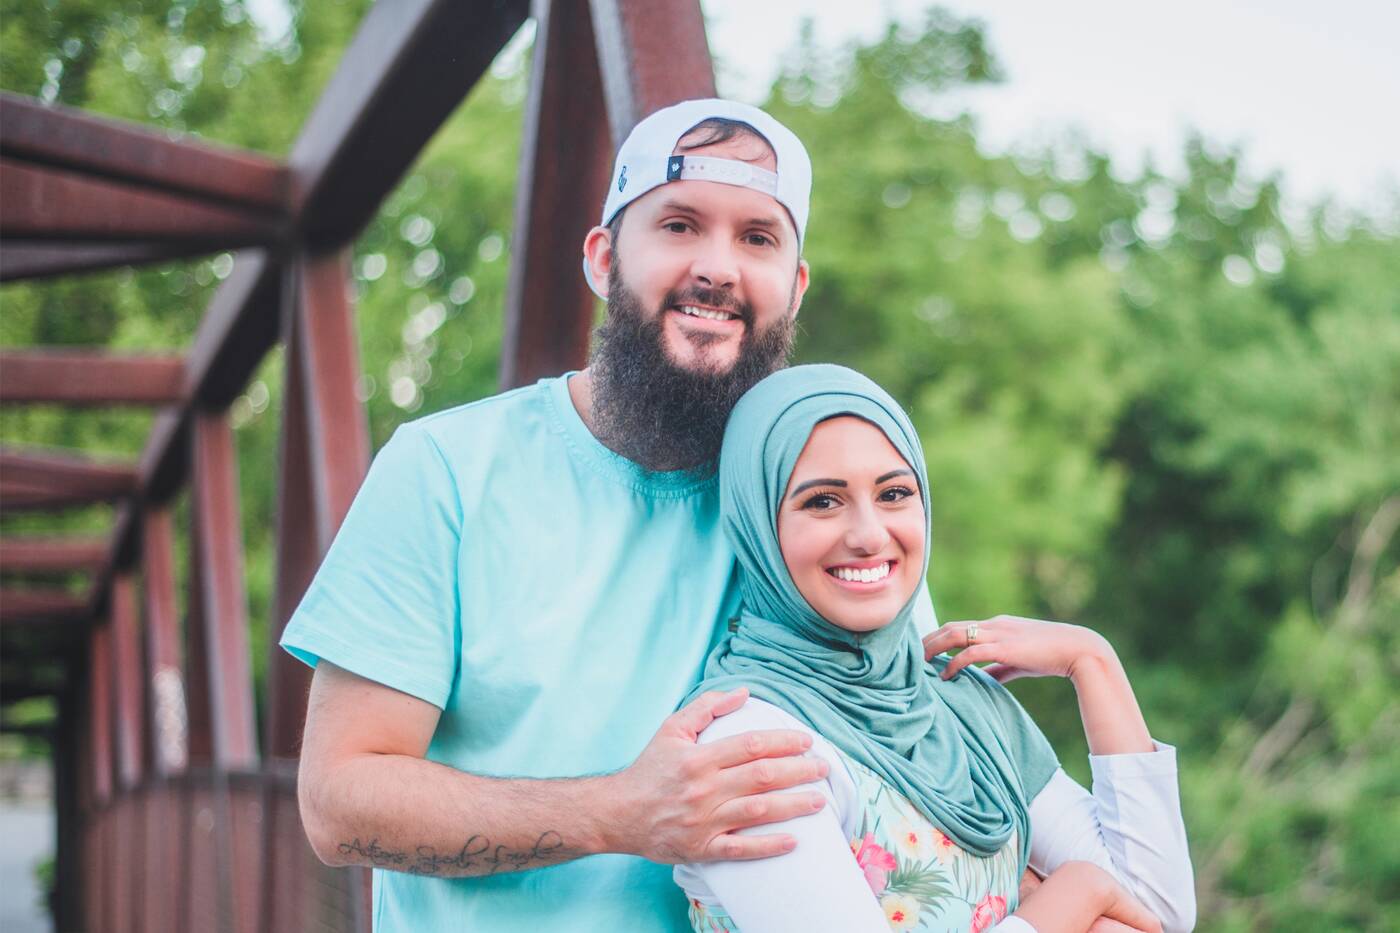 VIDEO: “Canadian Couple Combats Islamophobia on TikTok”, Arsalan Iftikhar